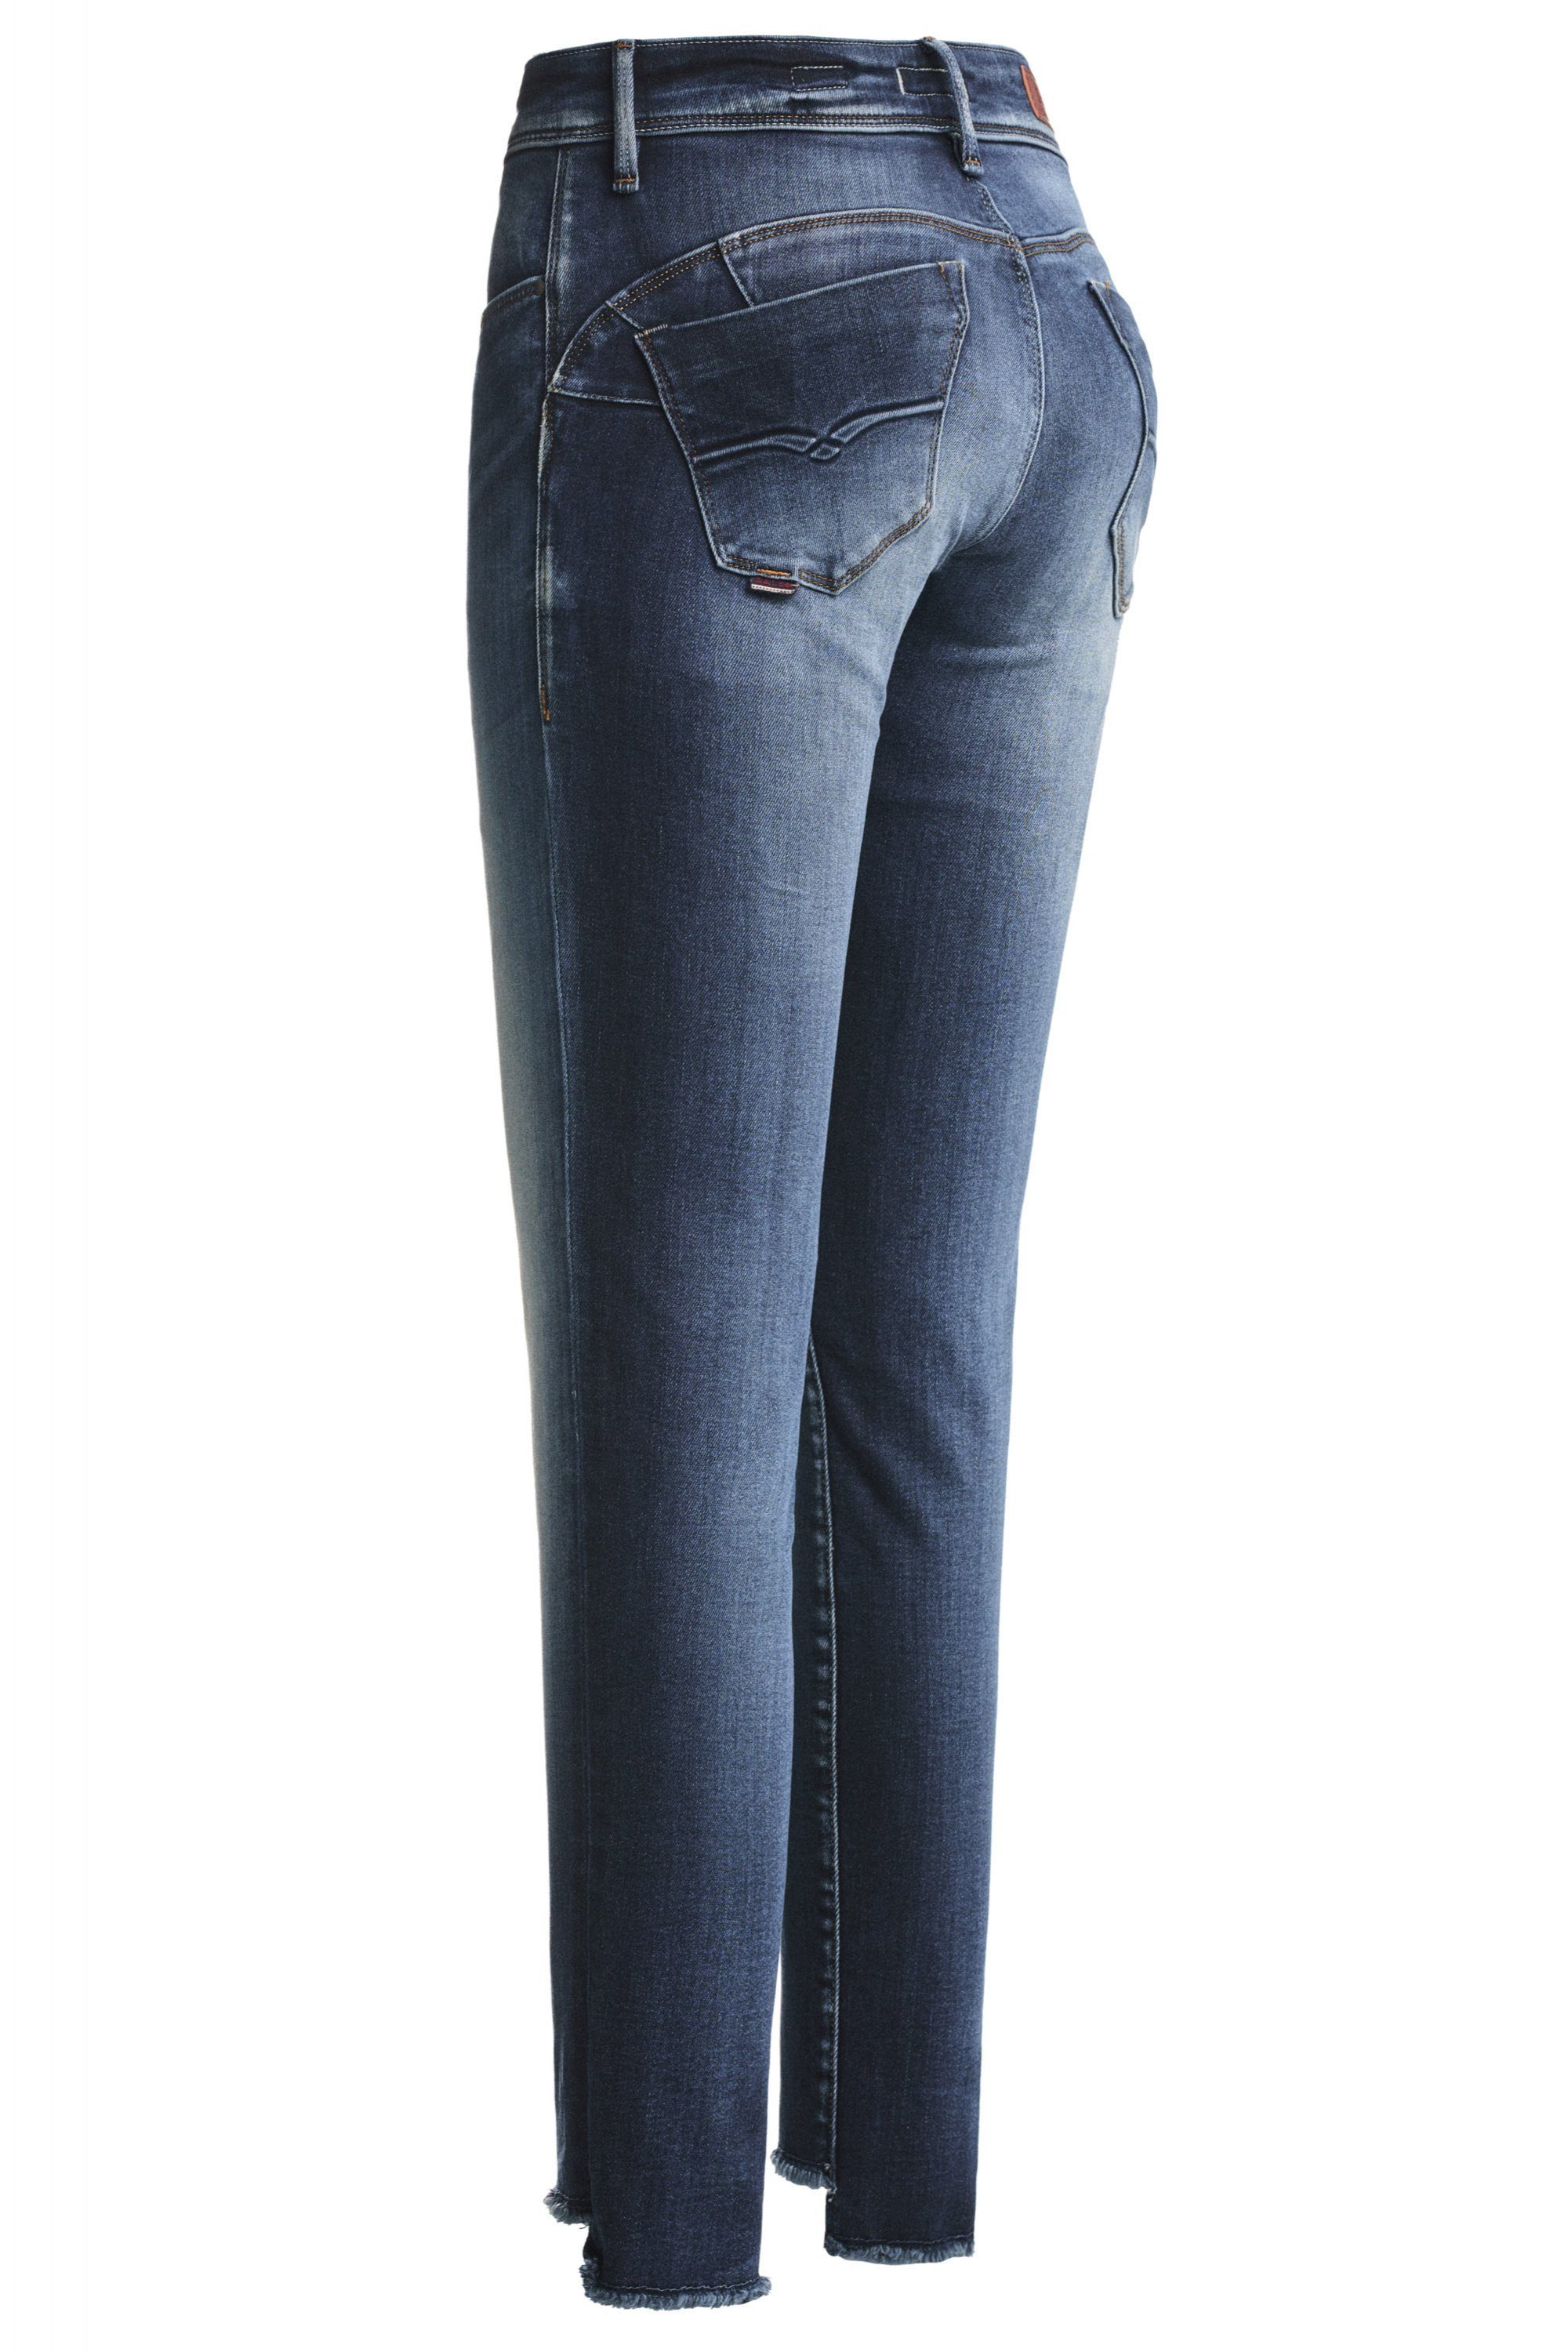 UP JEANS premium PUSH CAPRI blue Stretch-Jeans SALSA waschung 120169.8504 WONDER Salsa